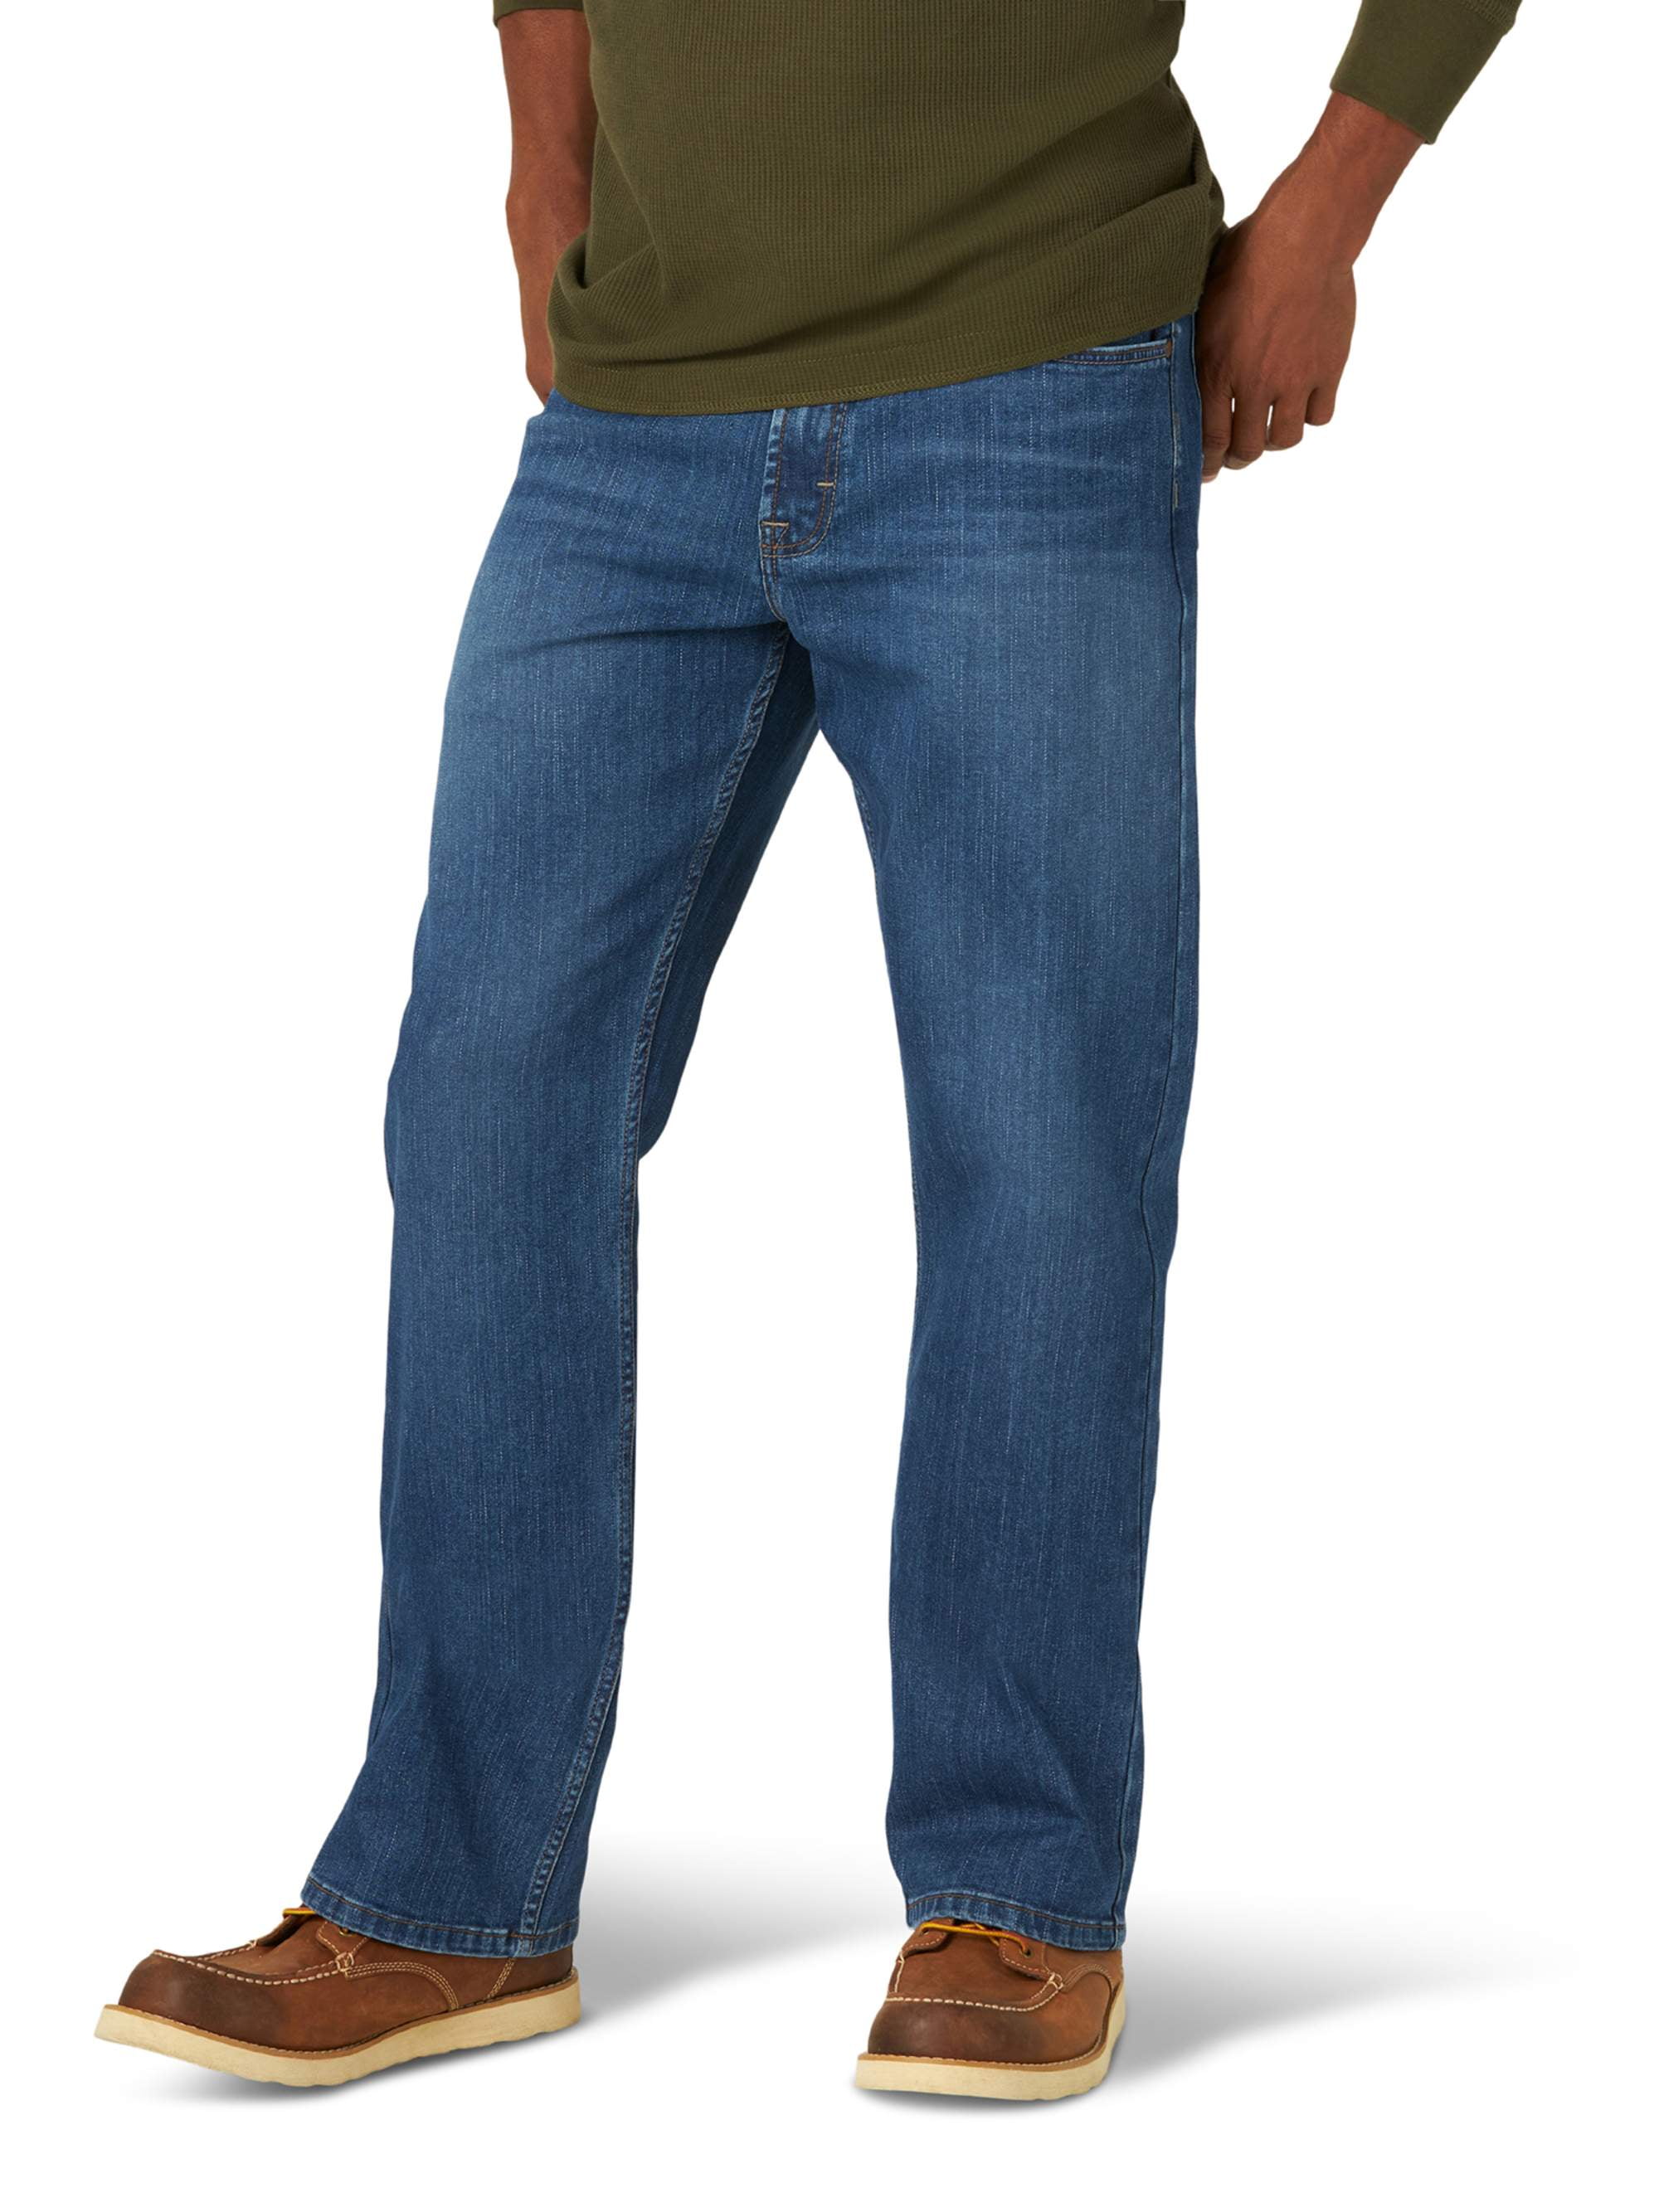 Wrangler Men's Premium 5 Star Bootcut Jean with Stretch - Walmart.com